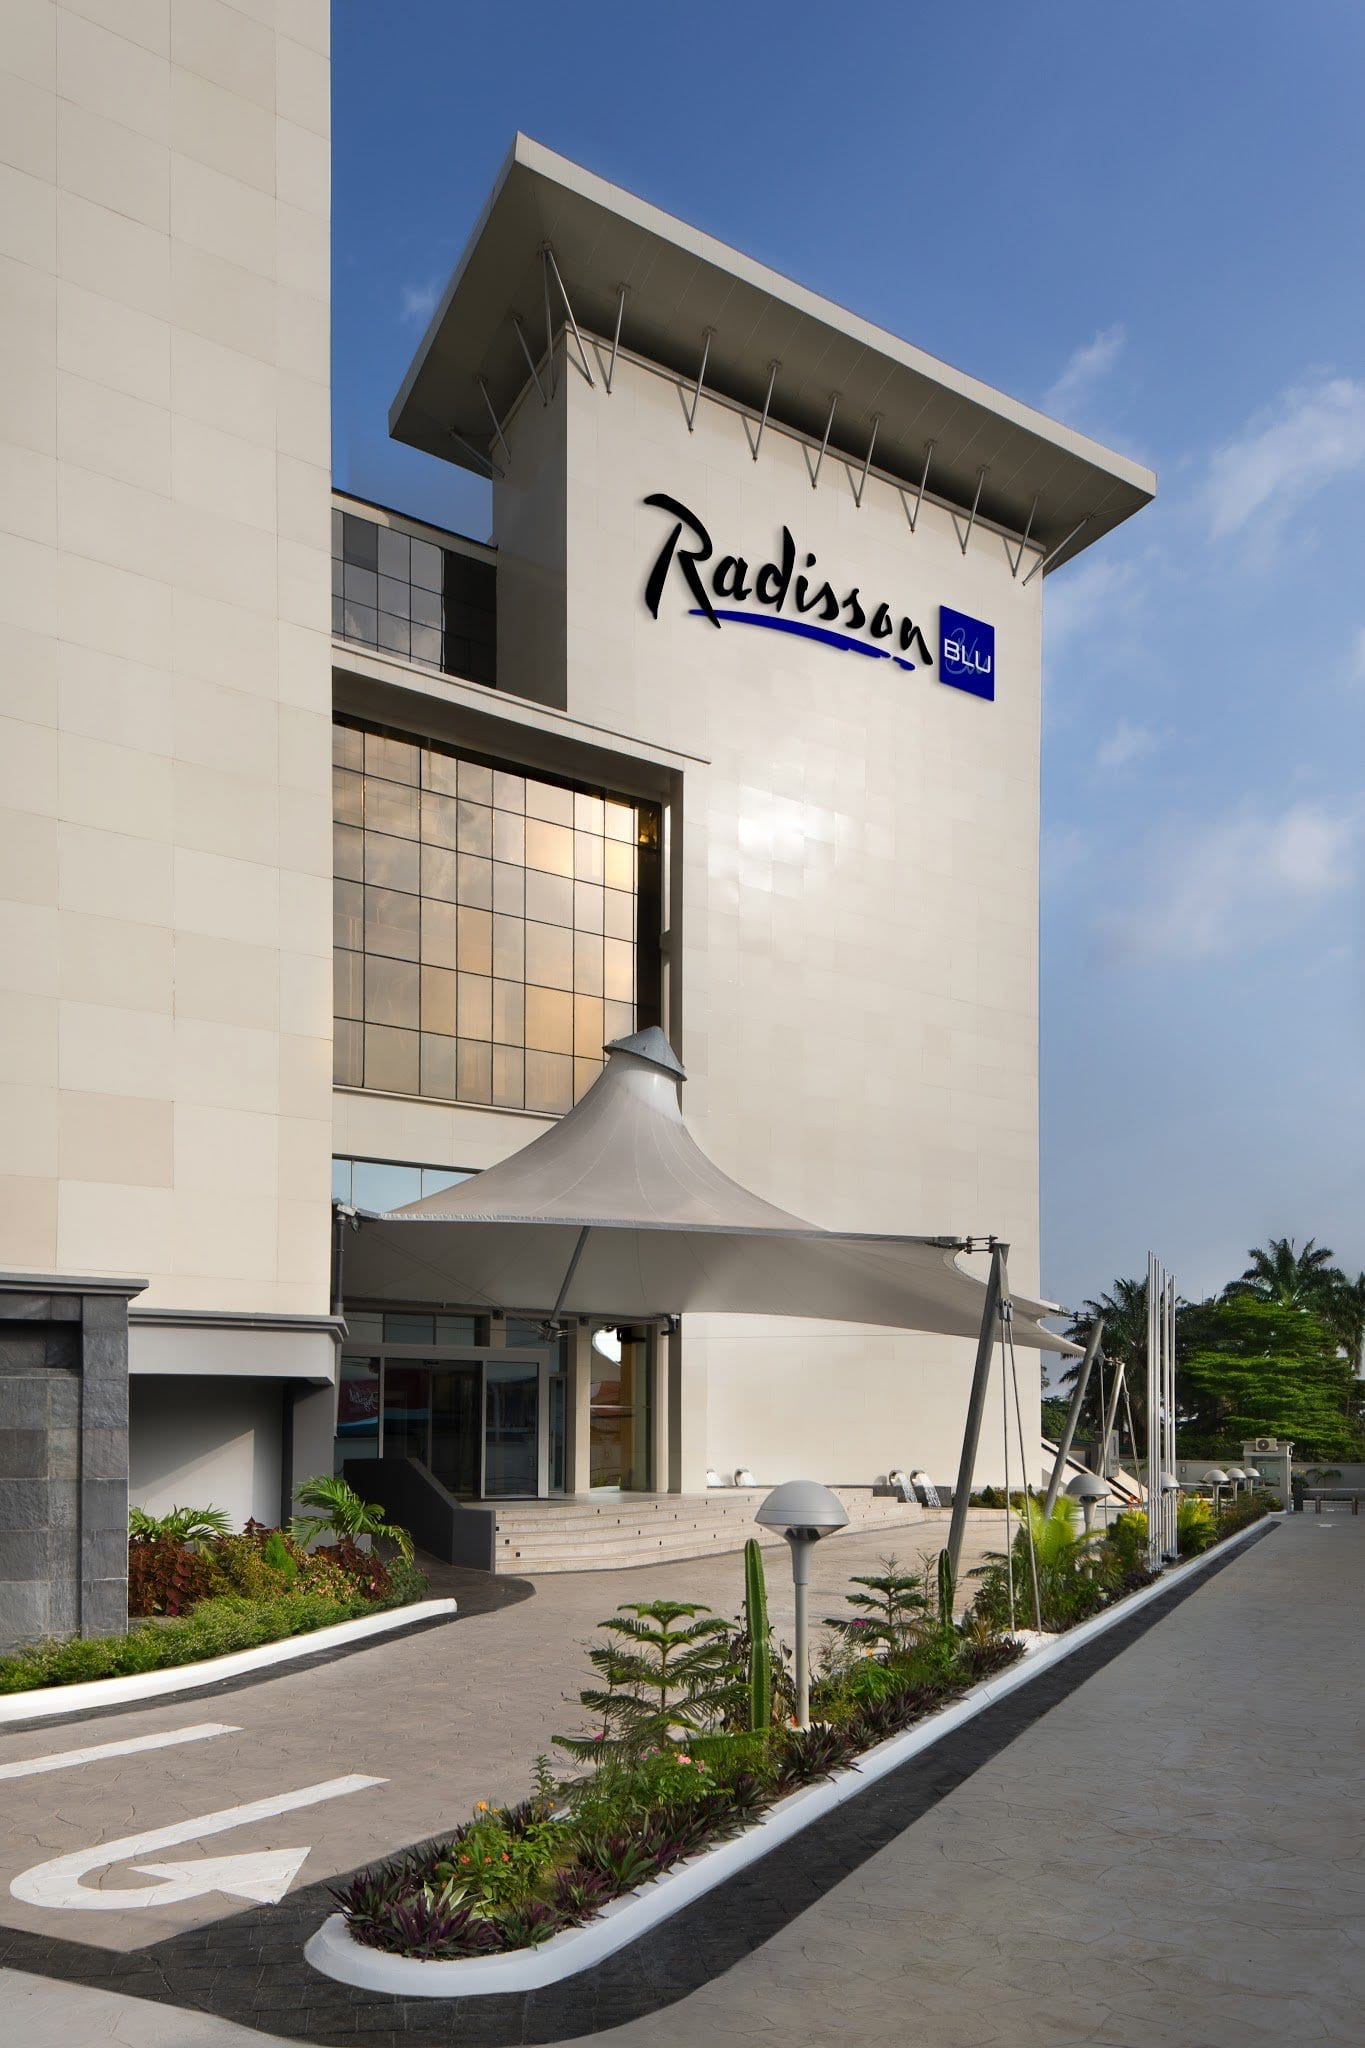 Radisson Blu - Best Rooftop Bars in Lagos Nigeria